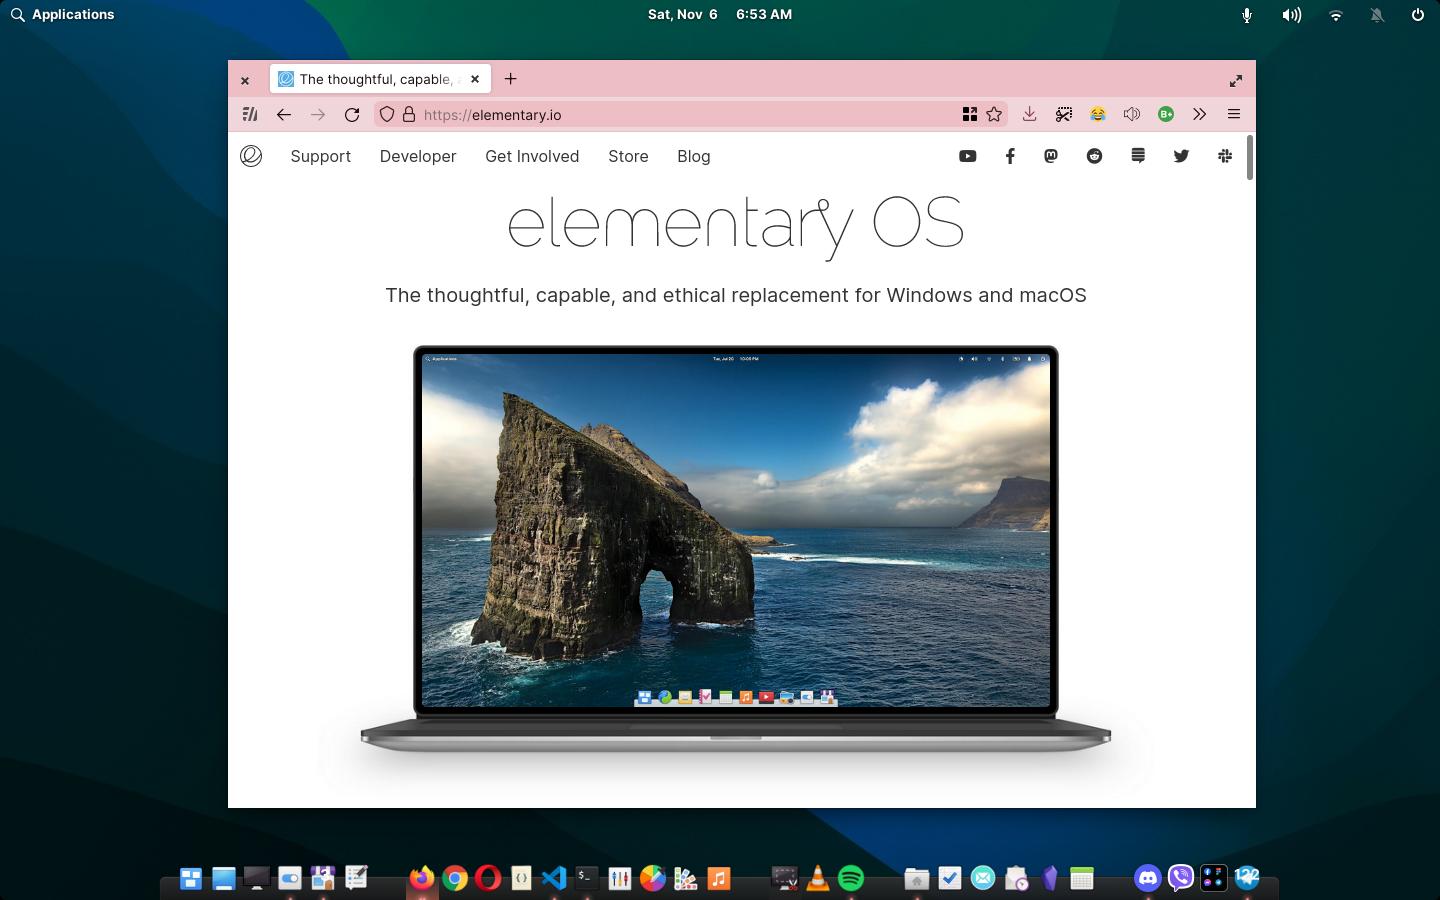 elementary OS website on Firefox